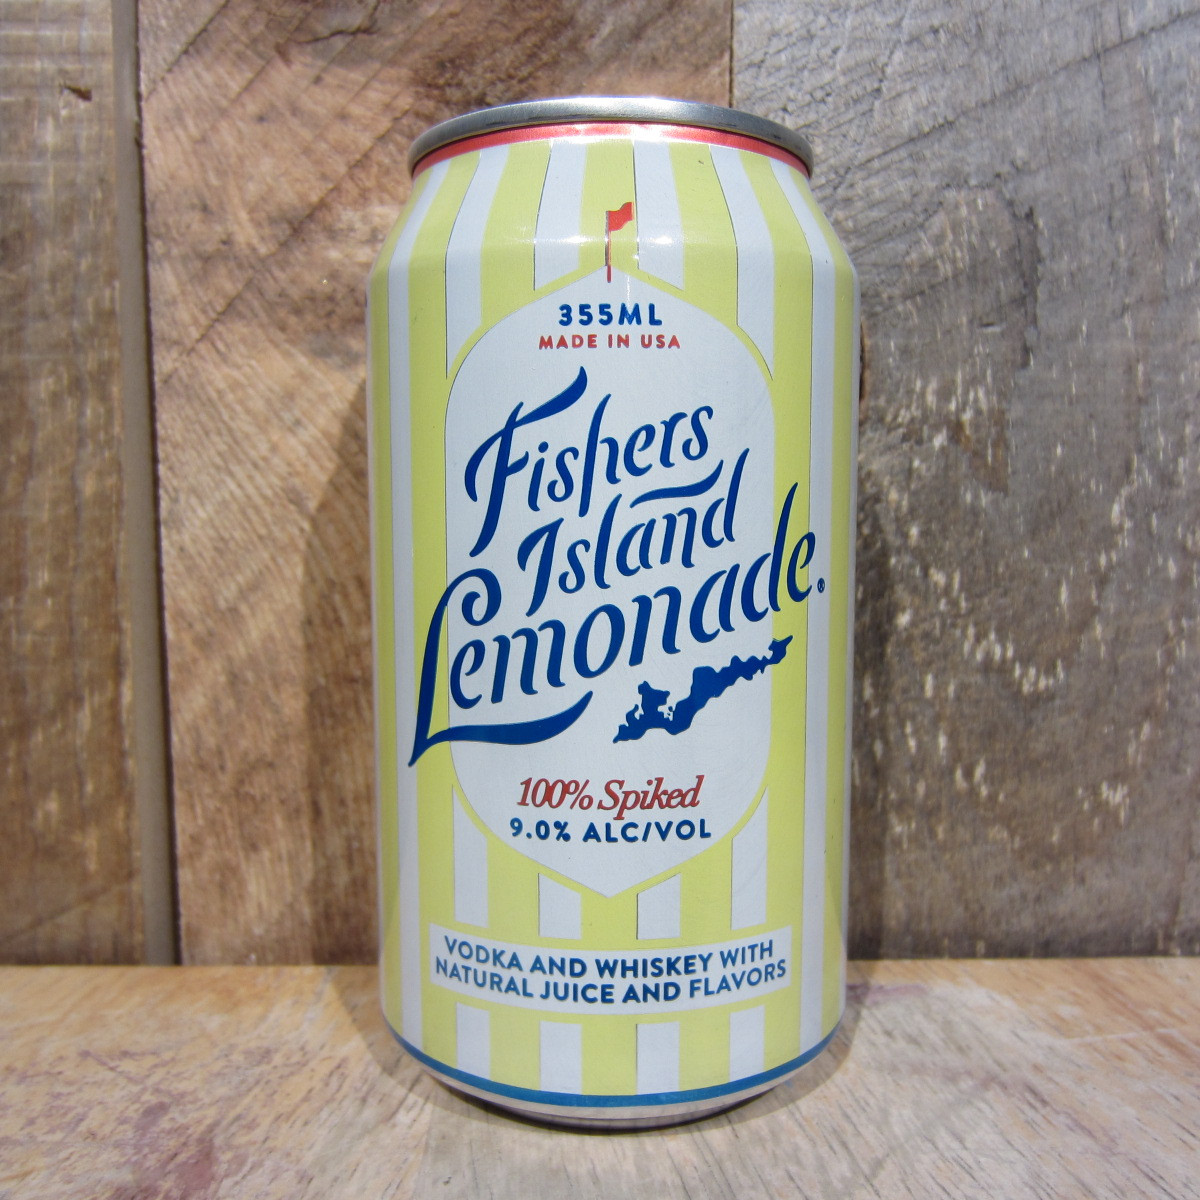 Top 15 Most Shared Fishers island Lemonade